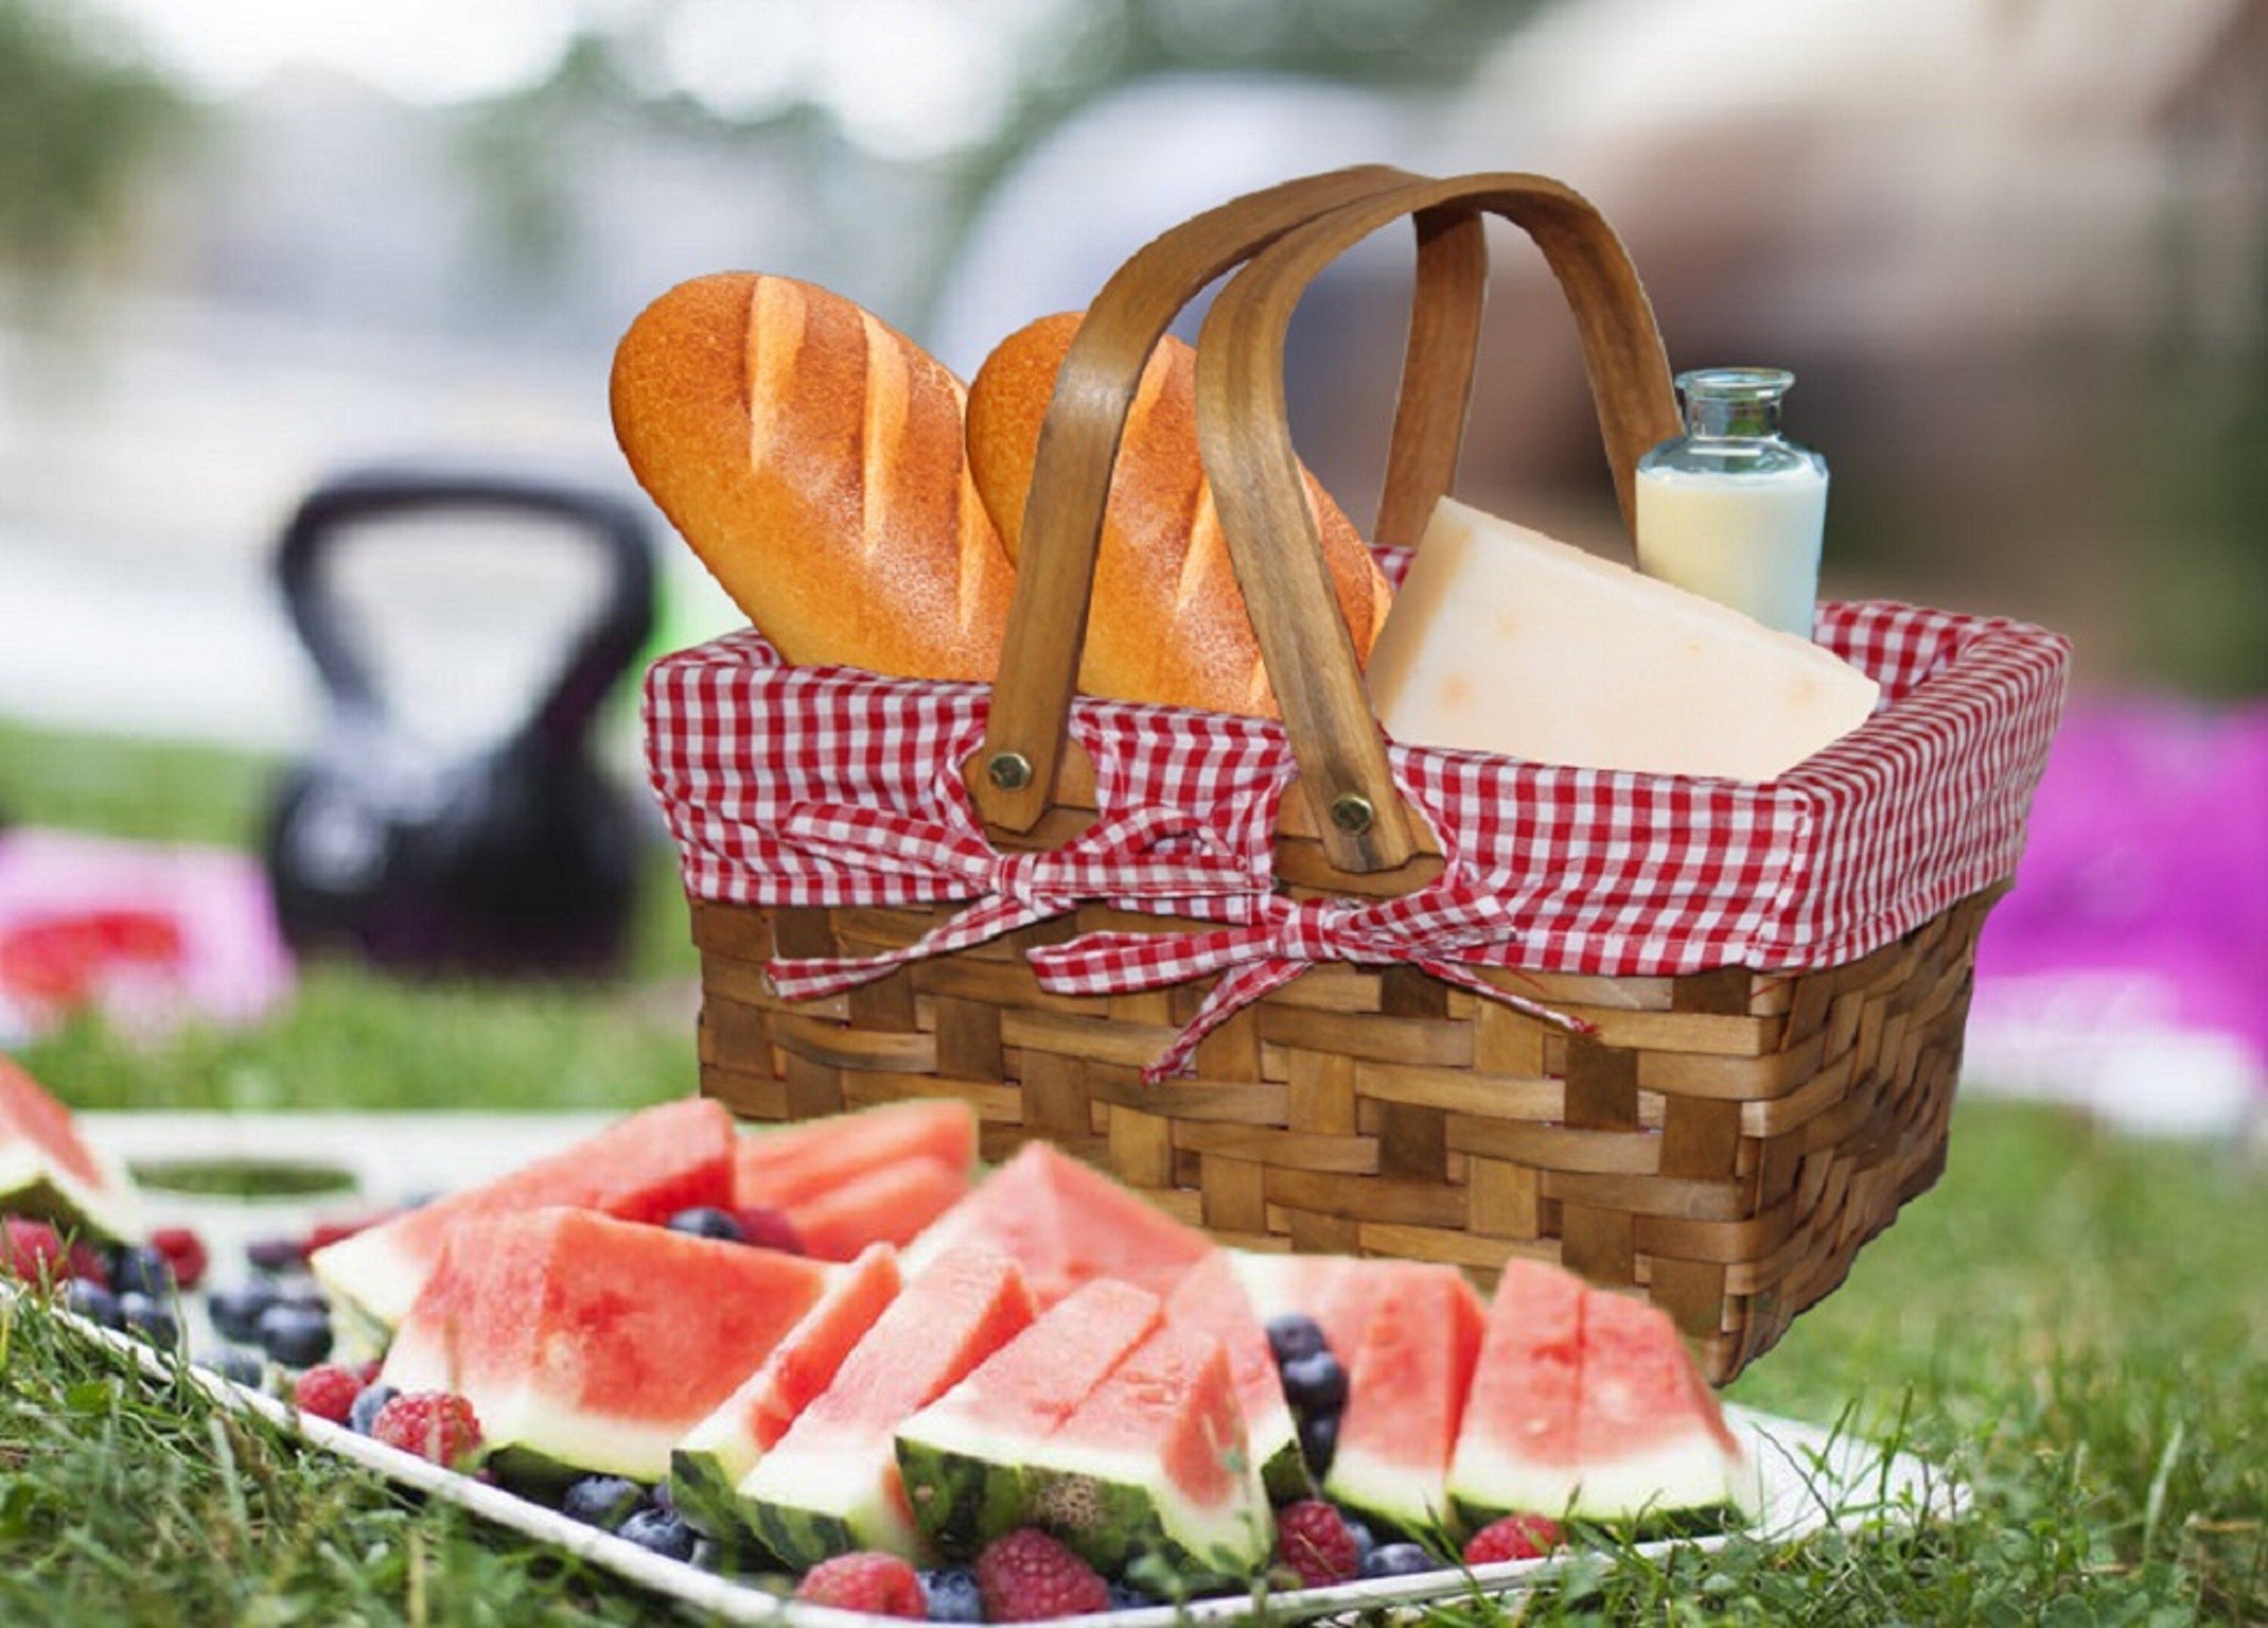 Доставка пикника. Корзина для пикника. Корзина на пикник с продуктами. Корзинка для пикника на природе. Корзина для пикника с едой.